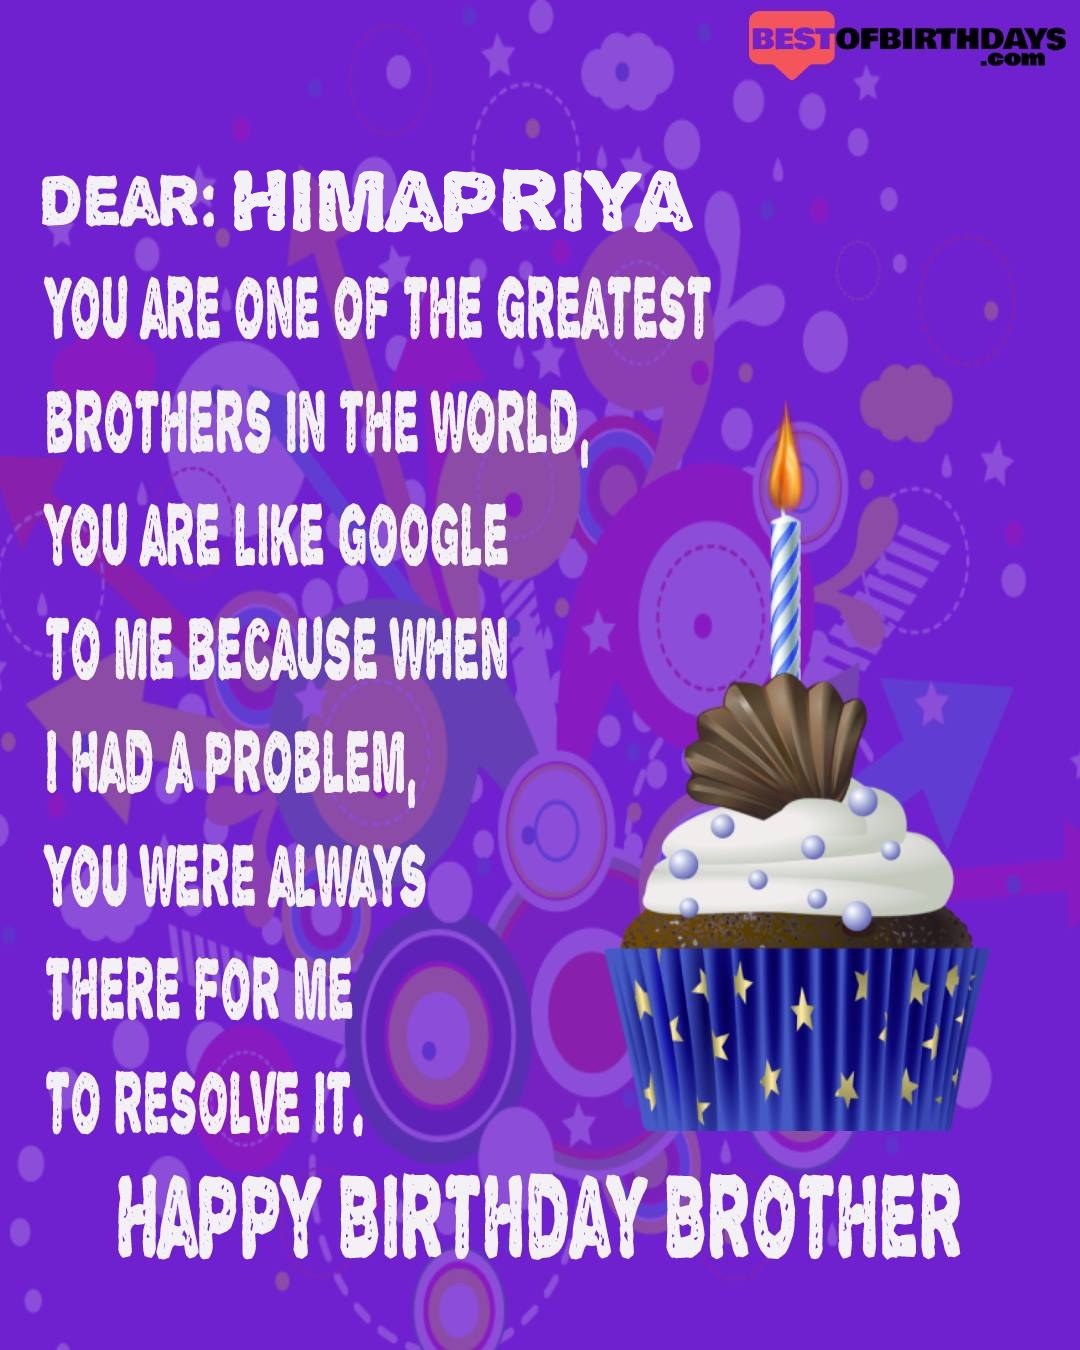 Happy birthday himapriya bhai brother bro